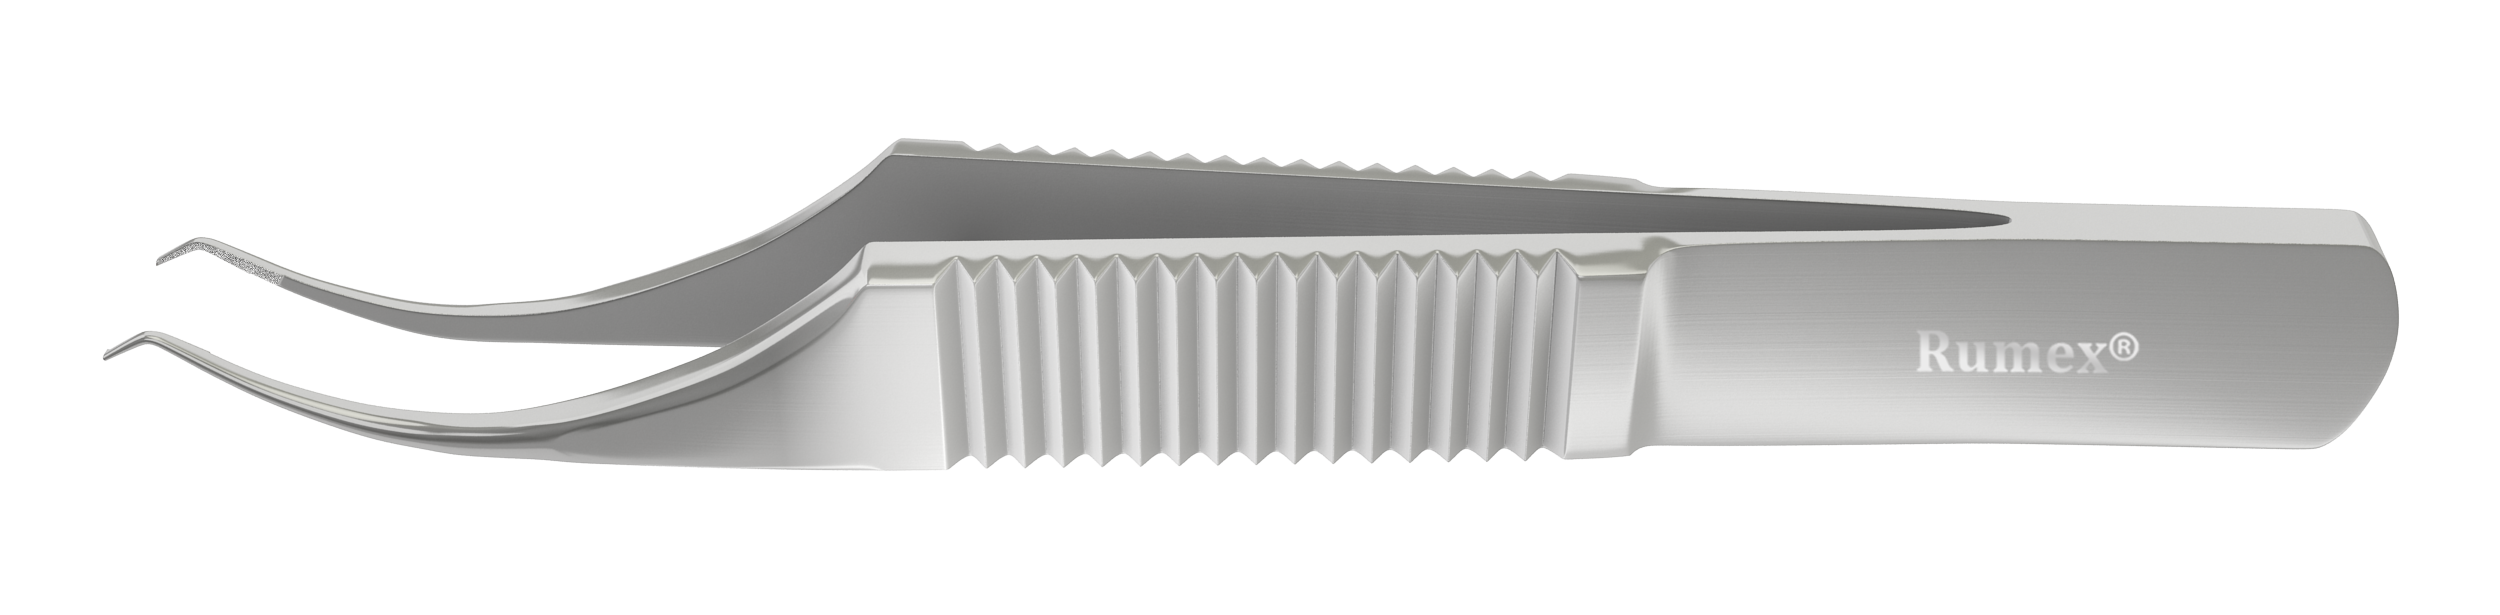 097R 4-0503S Colibri-Bonn Corneal Forceps, 0.12 mm, 1x2 Teeth, Flat Handle, Length 84 mm, Stainless Steel